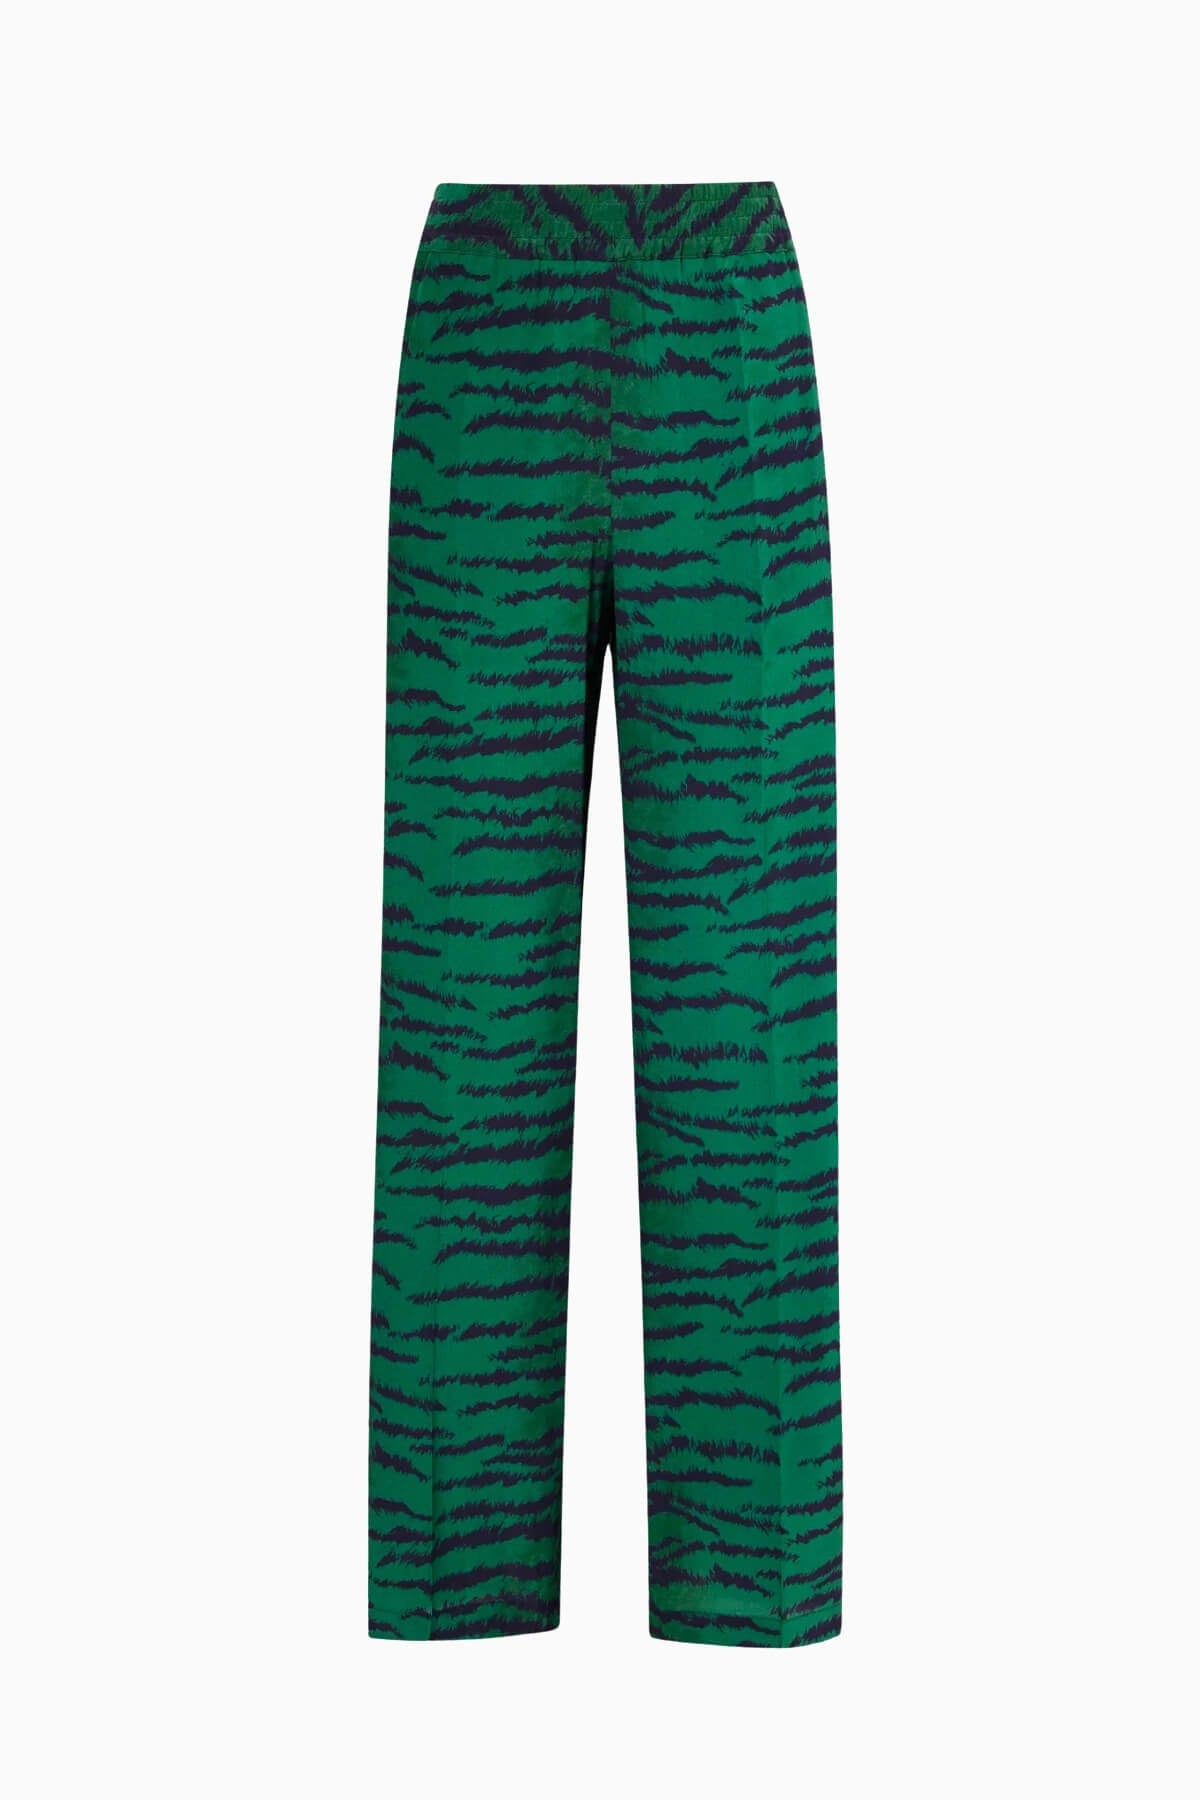 Victoria Beckham Tiger Print Pyjama Trouser - Green/ Navy Tiger